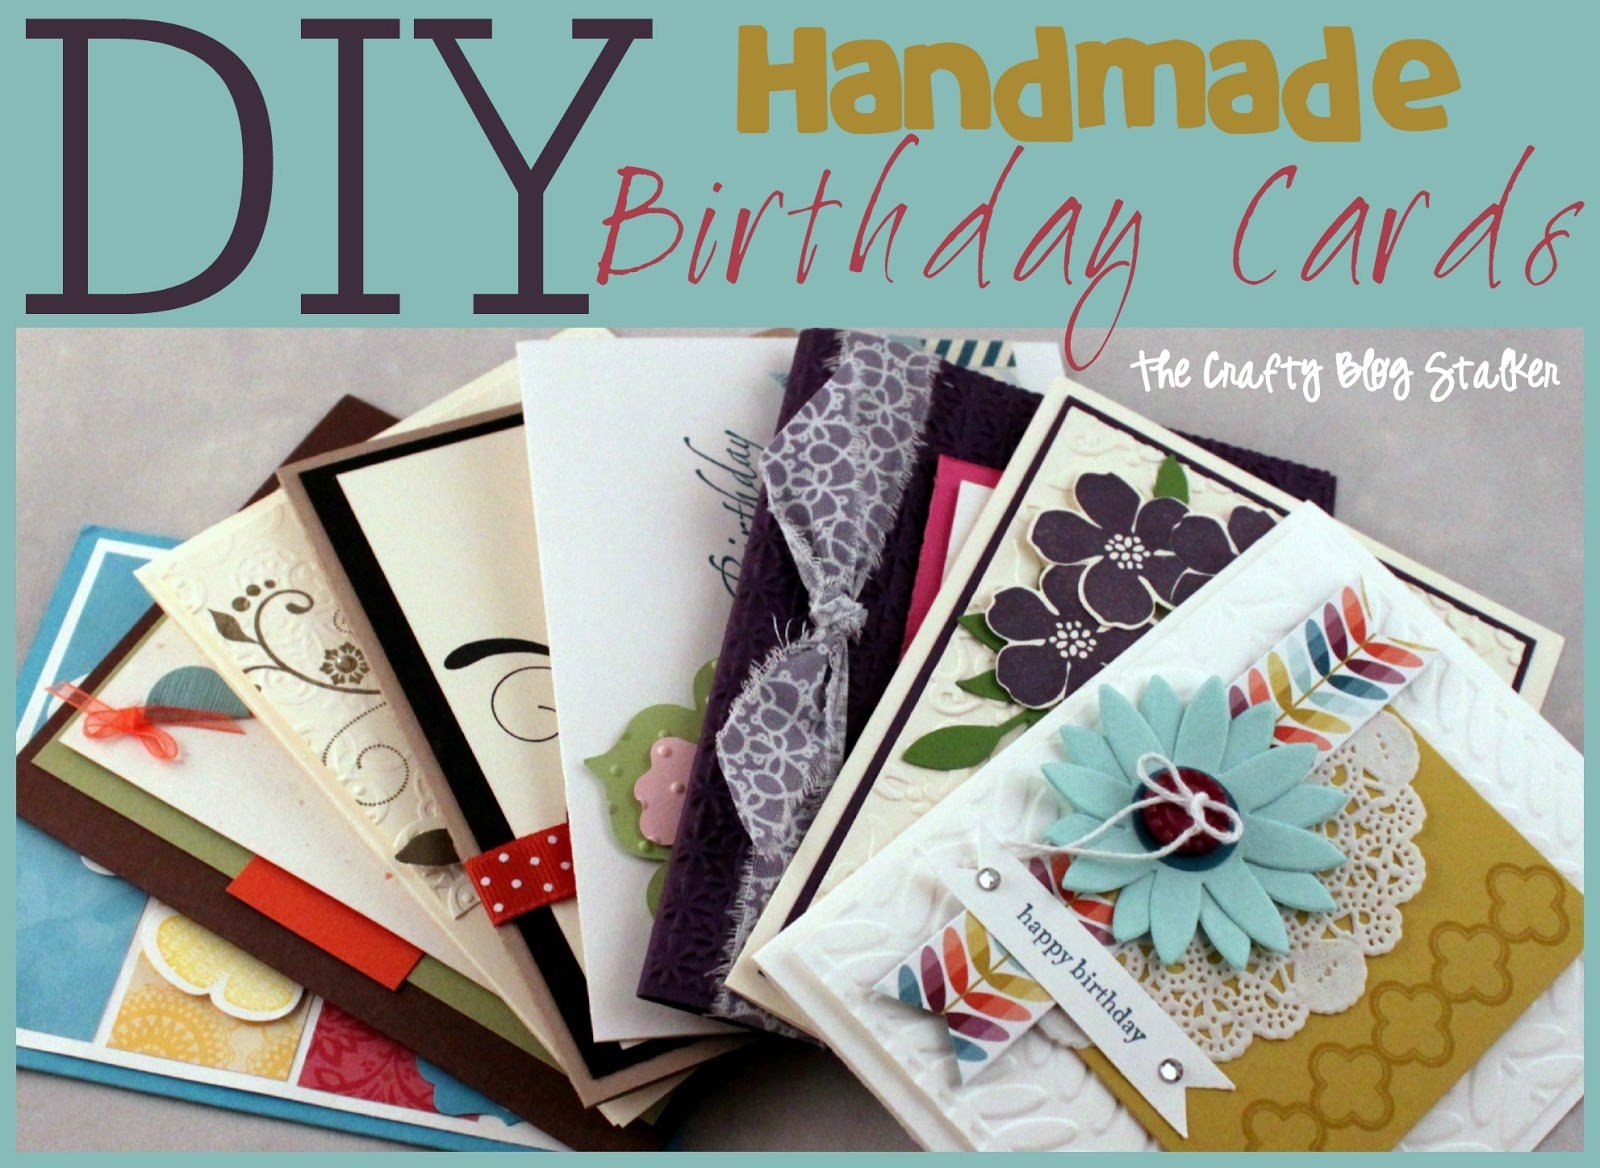 Simple Birthday Card Ideas Handmade Birthday Card Ideas The Crafty Blog Stalker